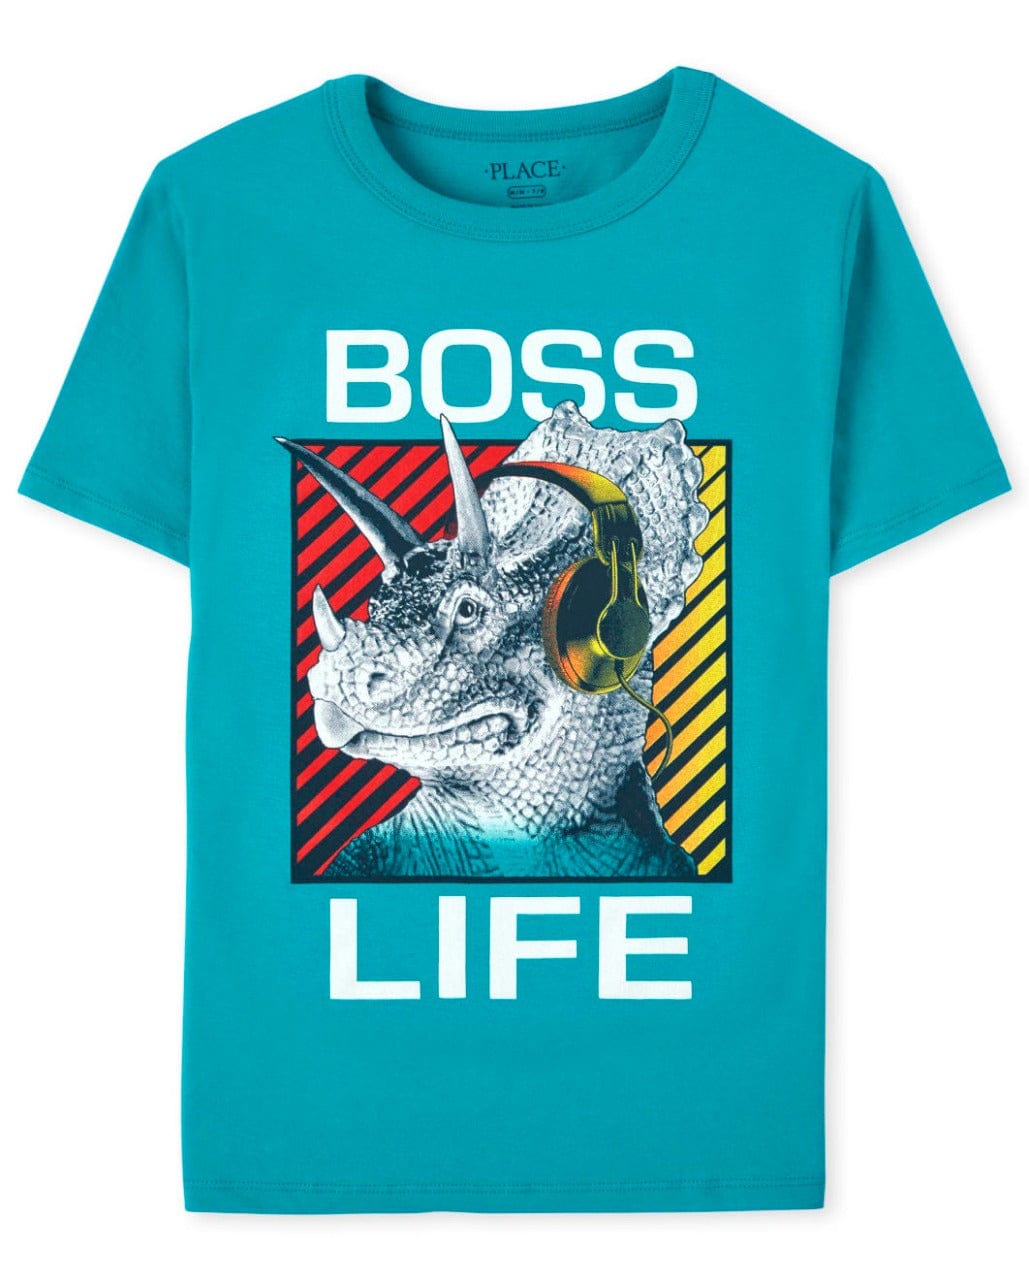 ElOutlet-Sumer Kids Kids Tshirt Boys Tshirt - Place - Turquoise (Boss Life)